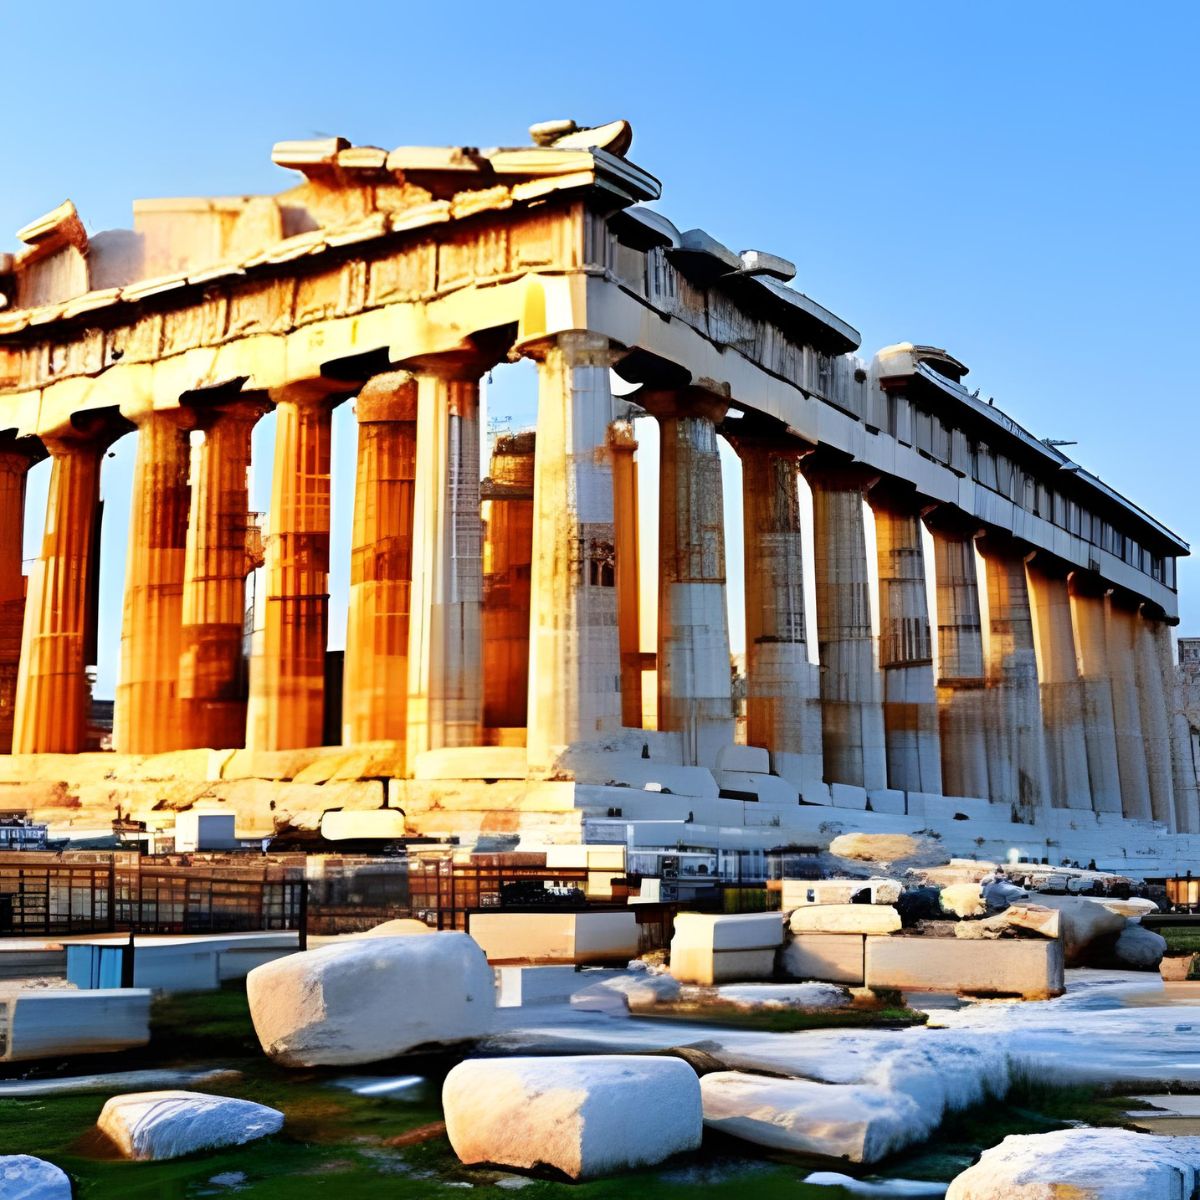 How did ancient Greeks build Parthenon?